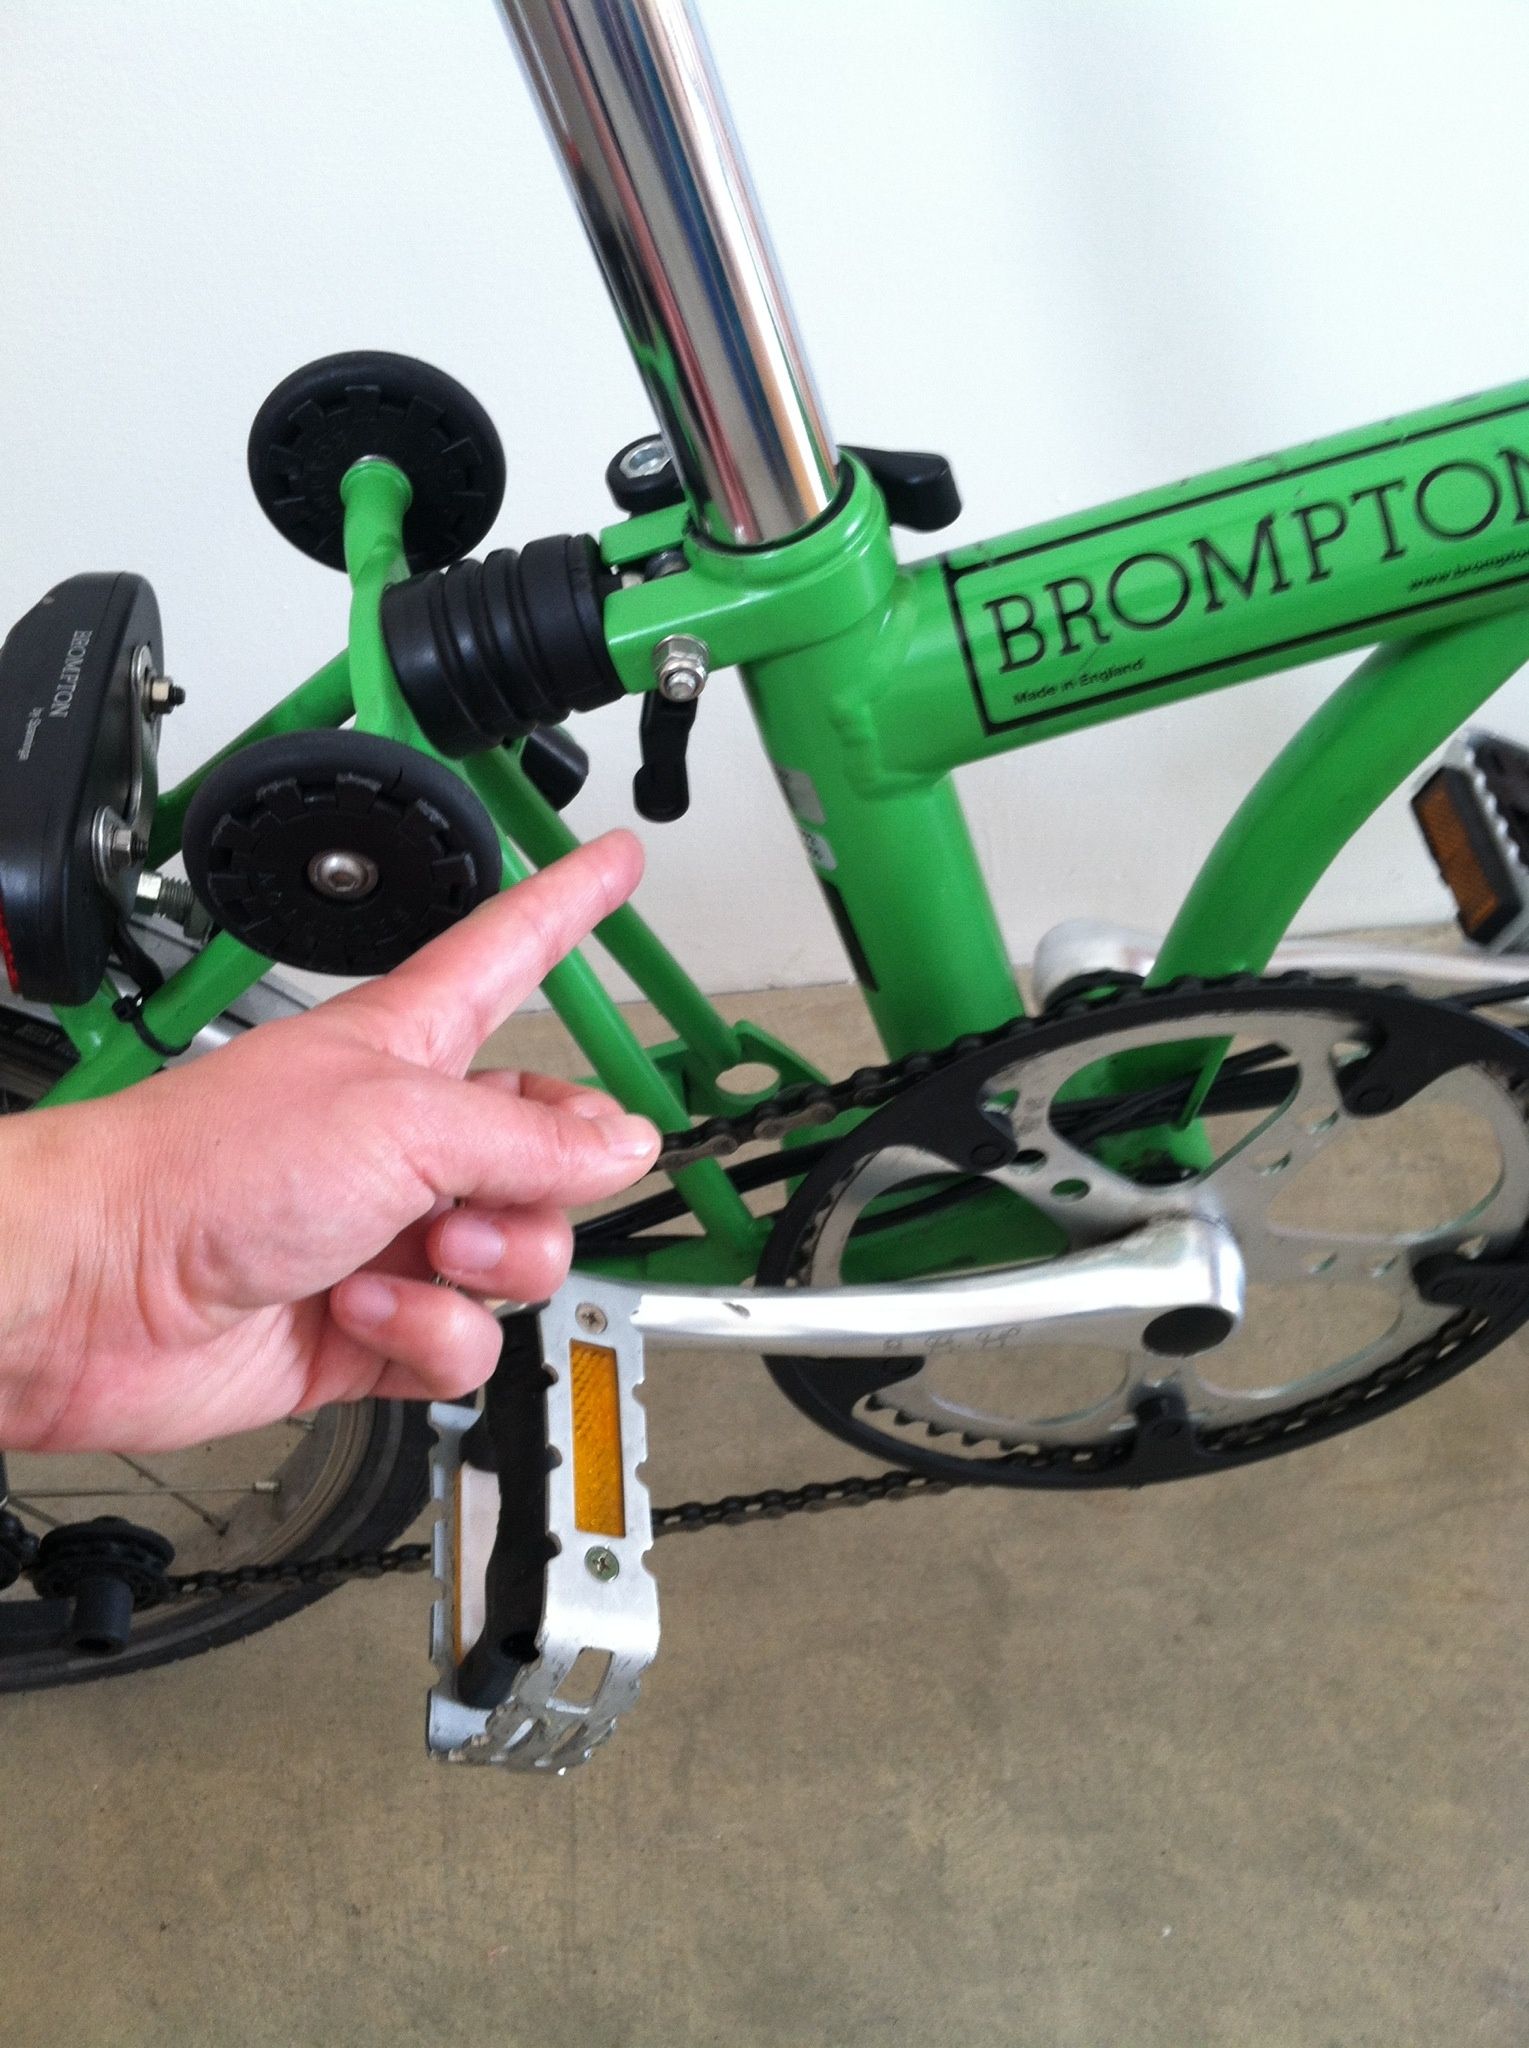 unfolding a brompton bike